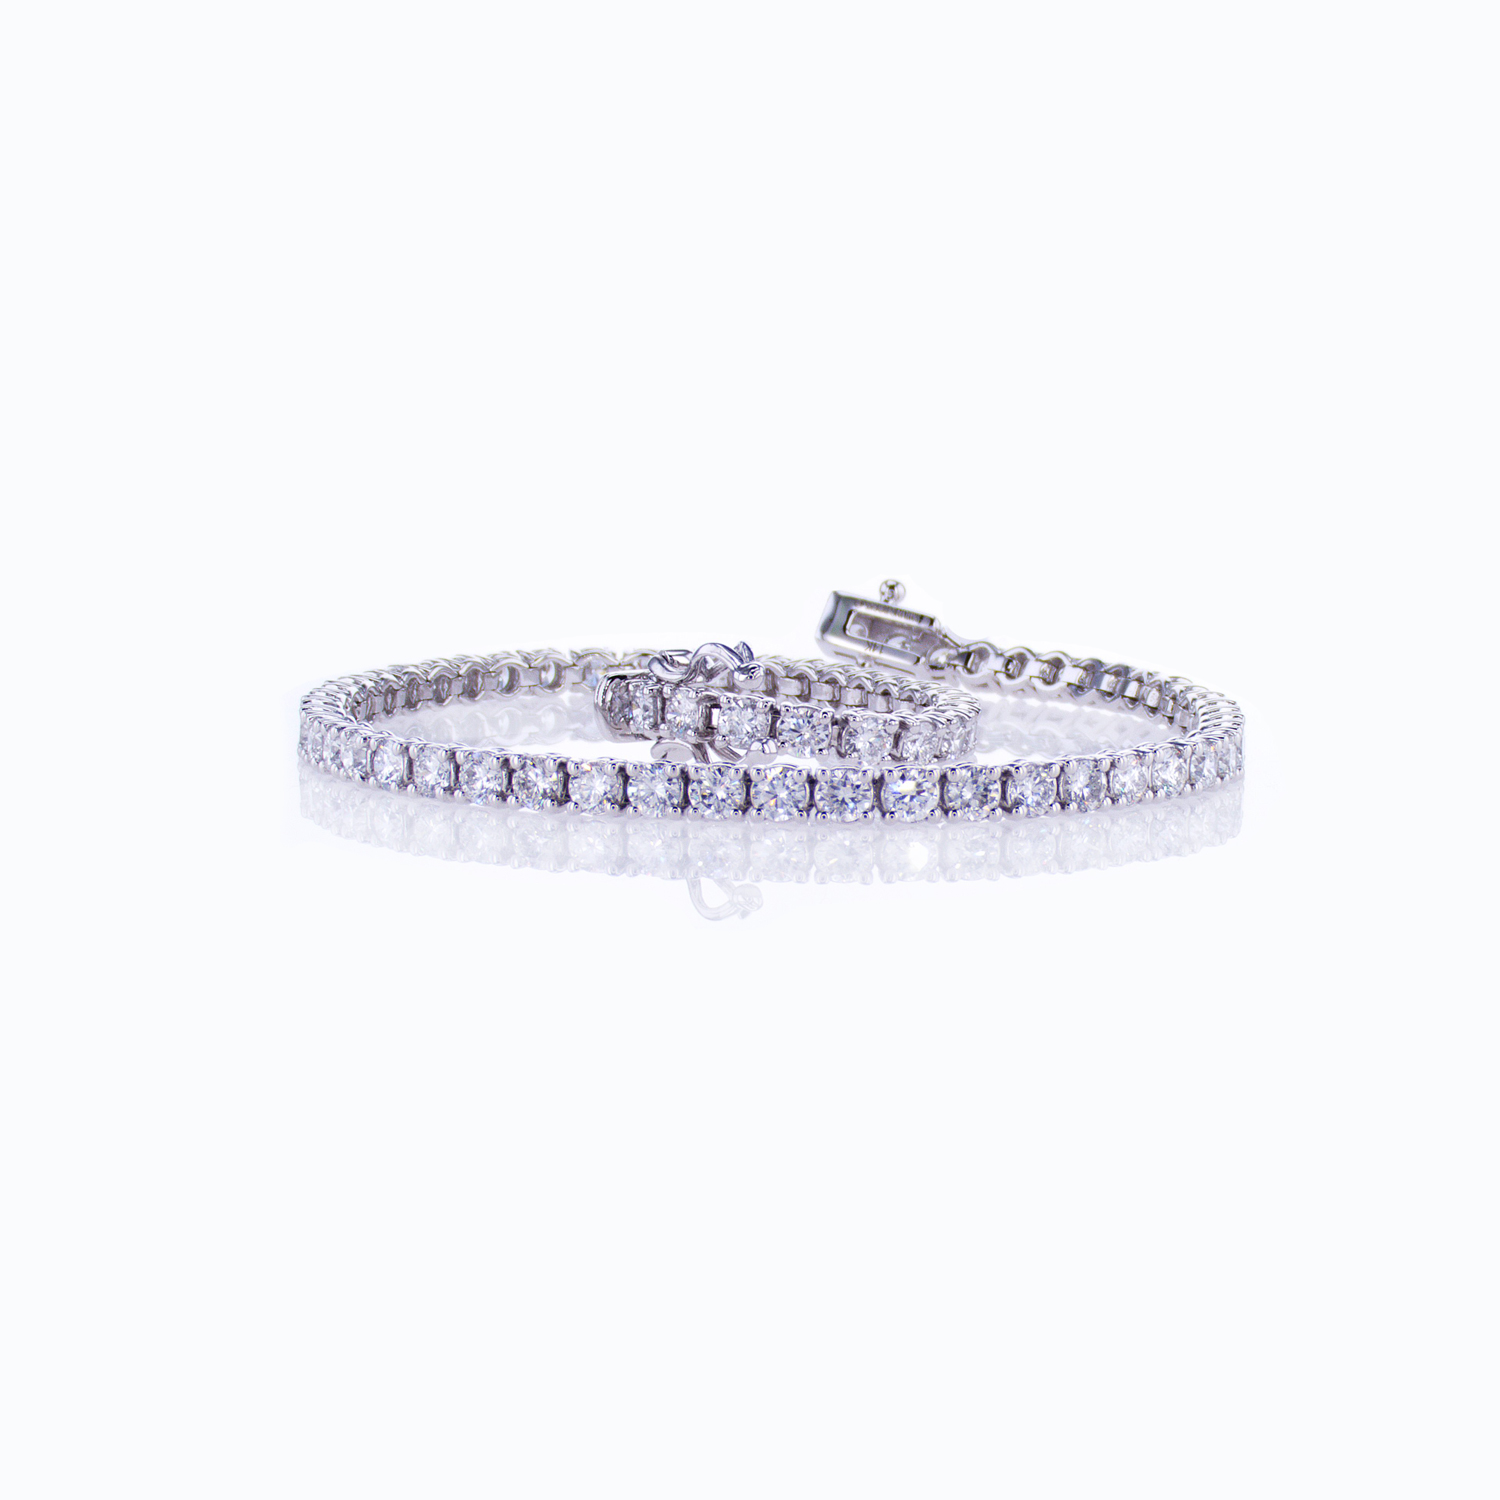 Costco Platinum Diamond Ring Sz 7 | eBay